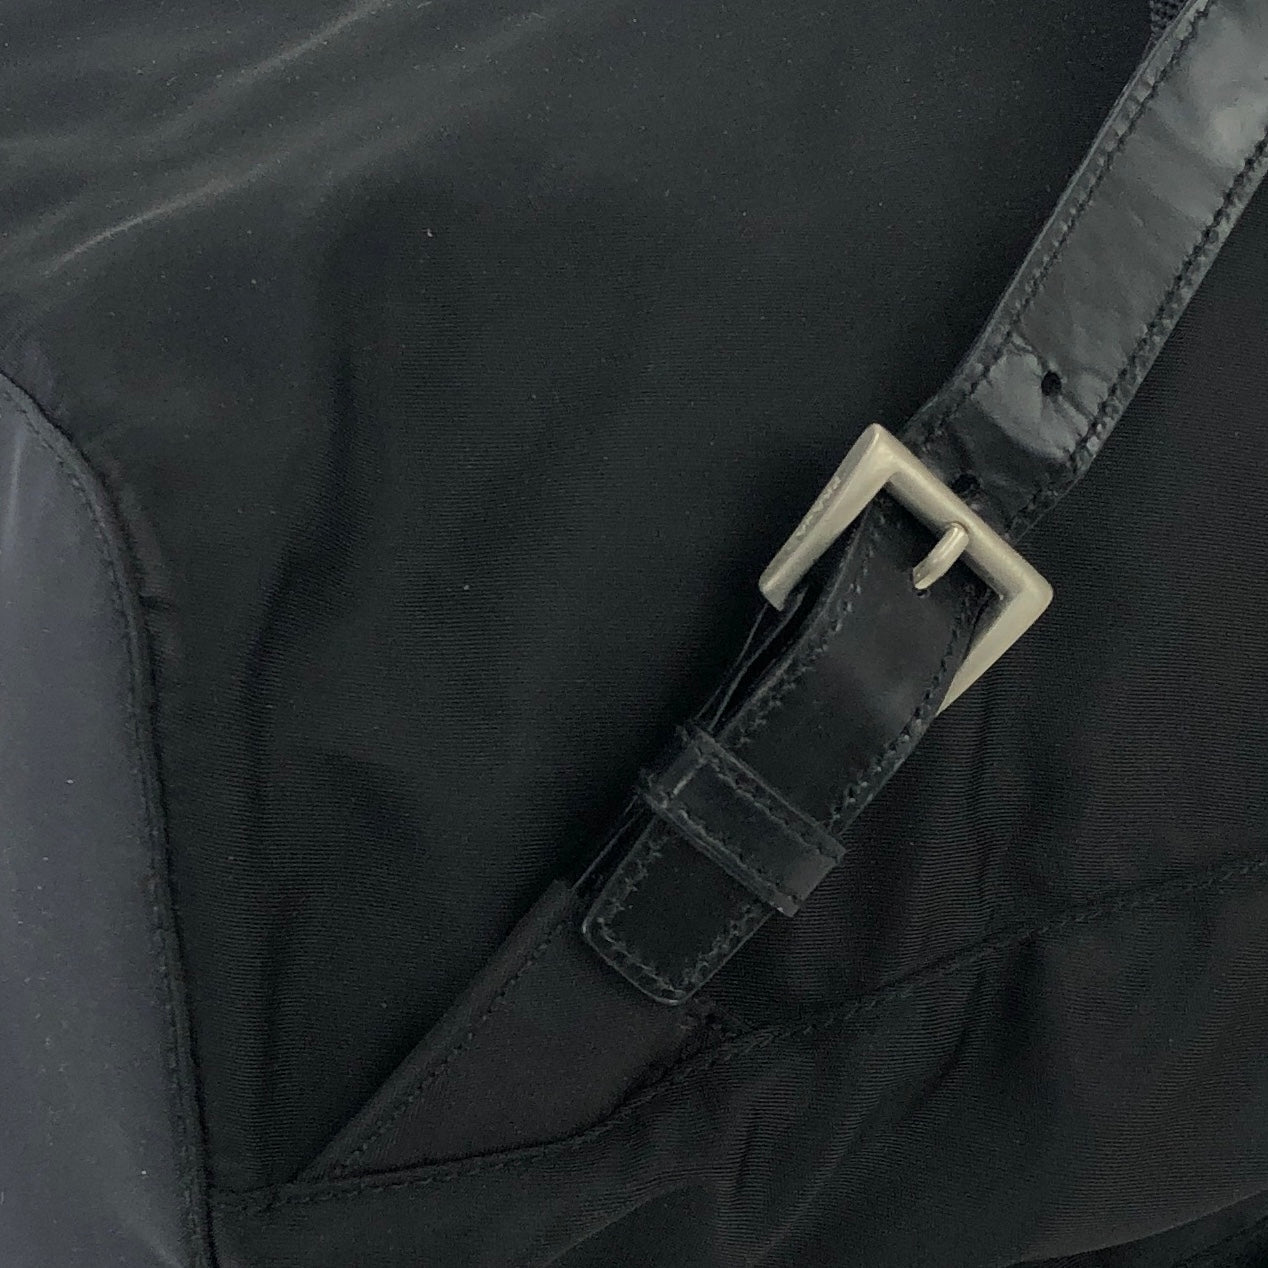 PRADA Triangle logo Double pocket Nylon Backpack Black Vintage 7sk78f